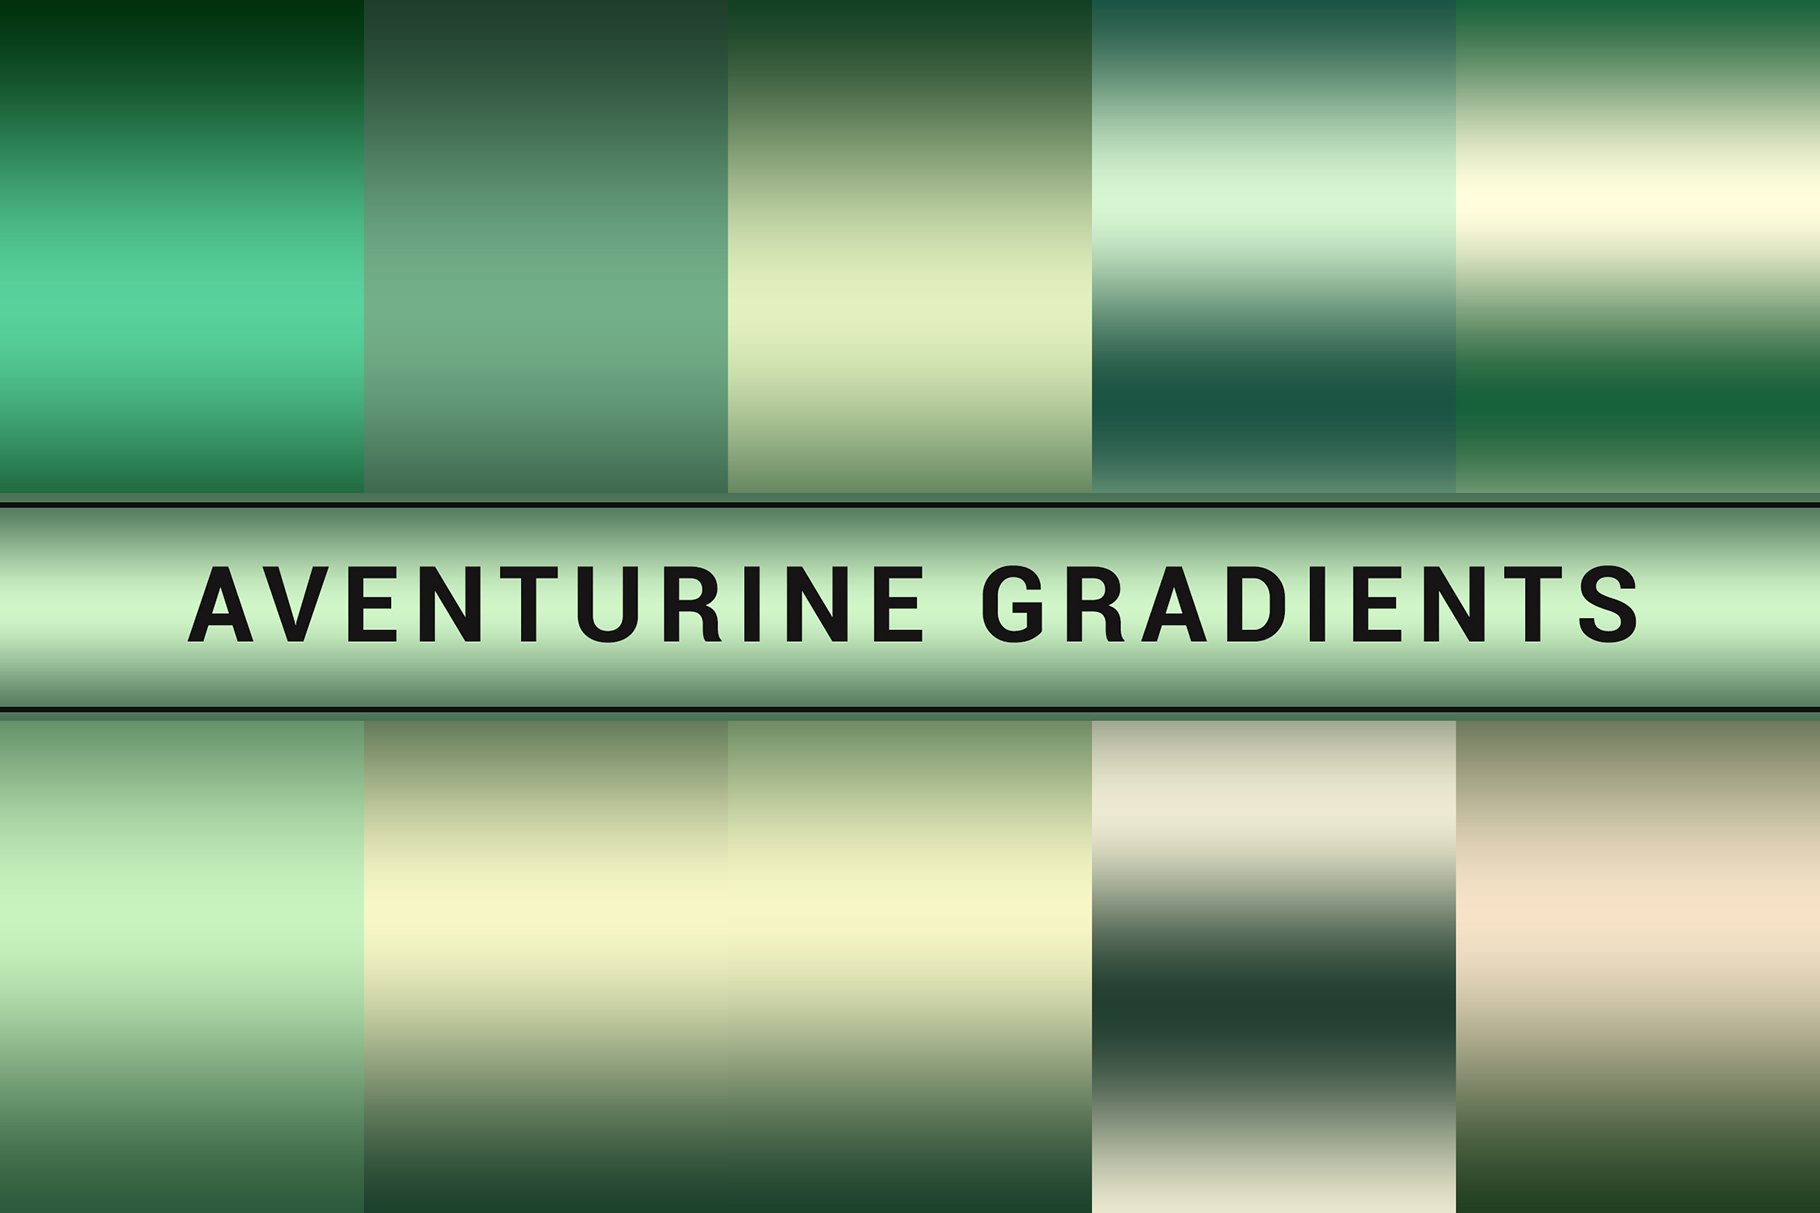 Aventurine Gradientscover image.